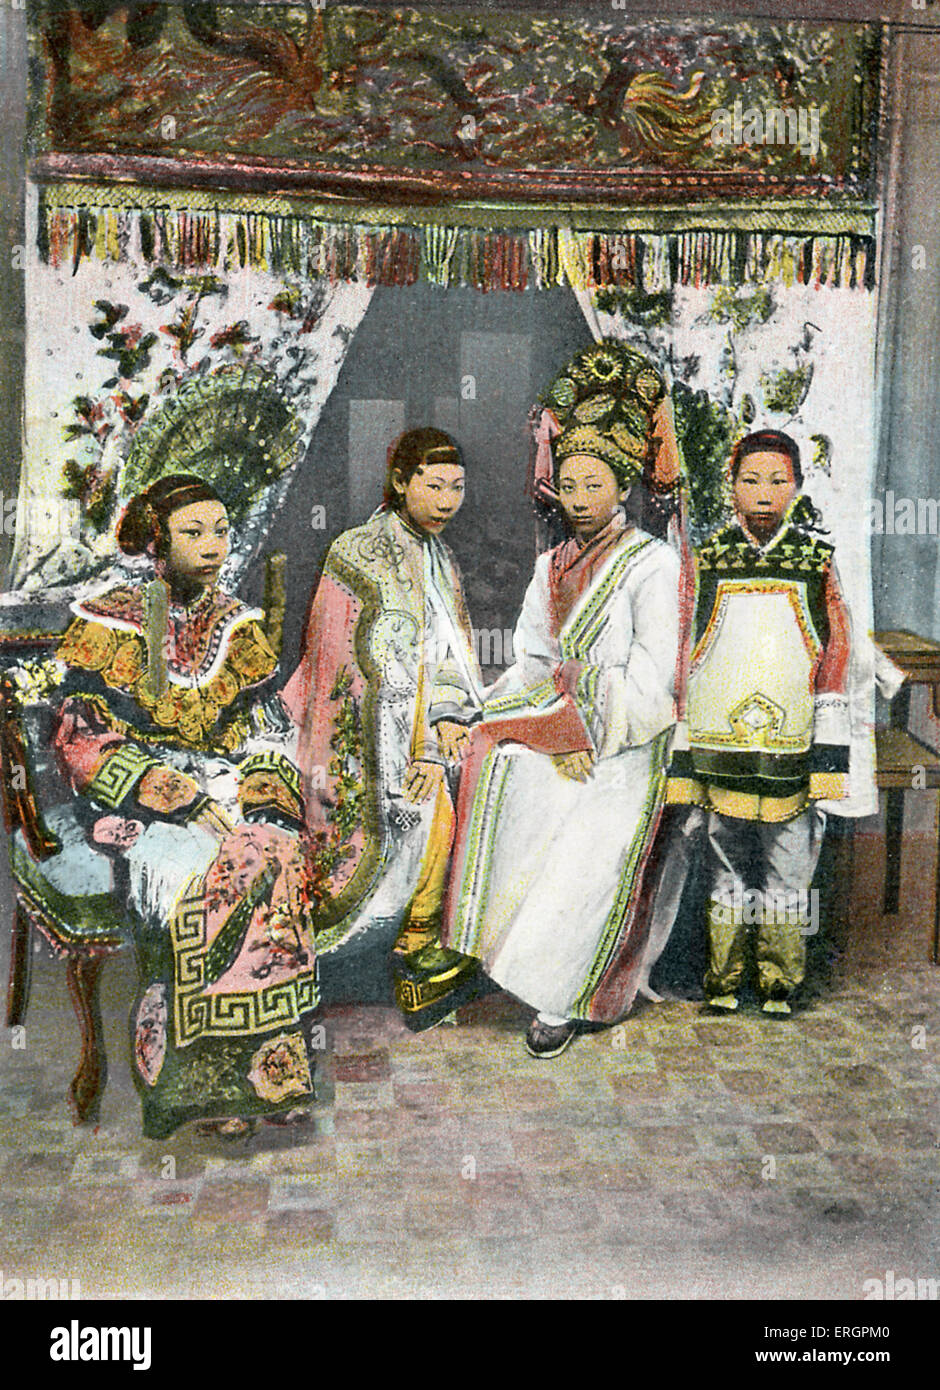 Group of Chinese actors.  Early 20th century. China, Hong Kong under British administration. Stock Photo